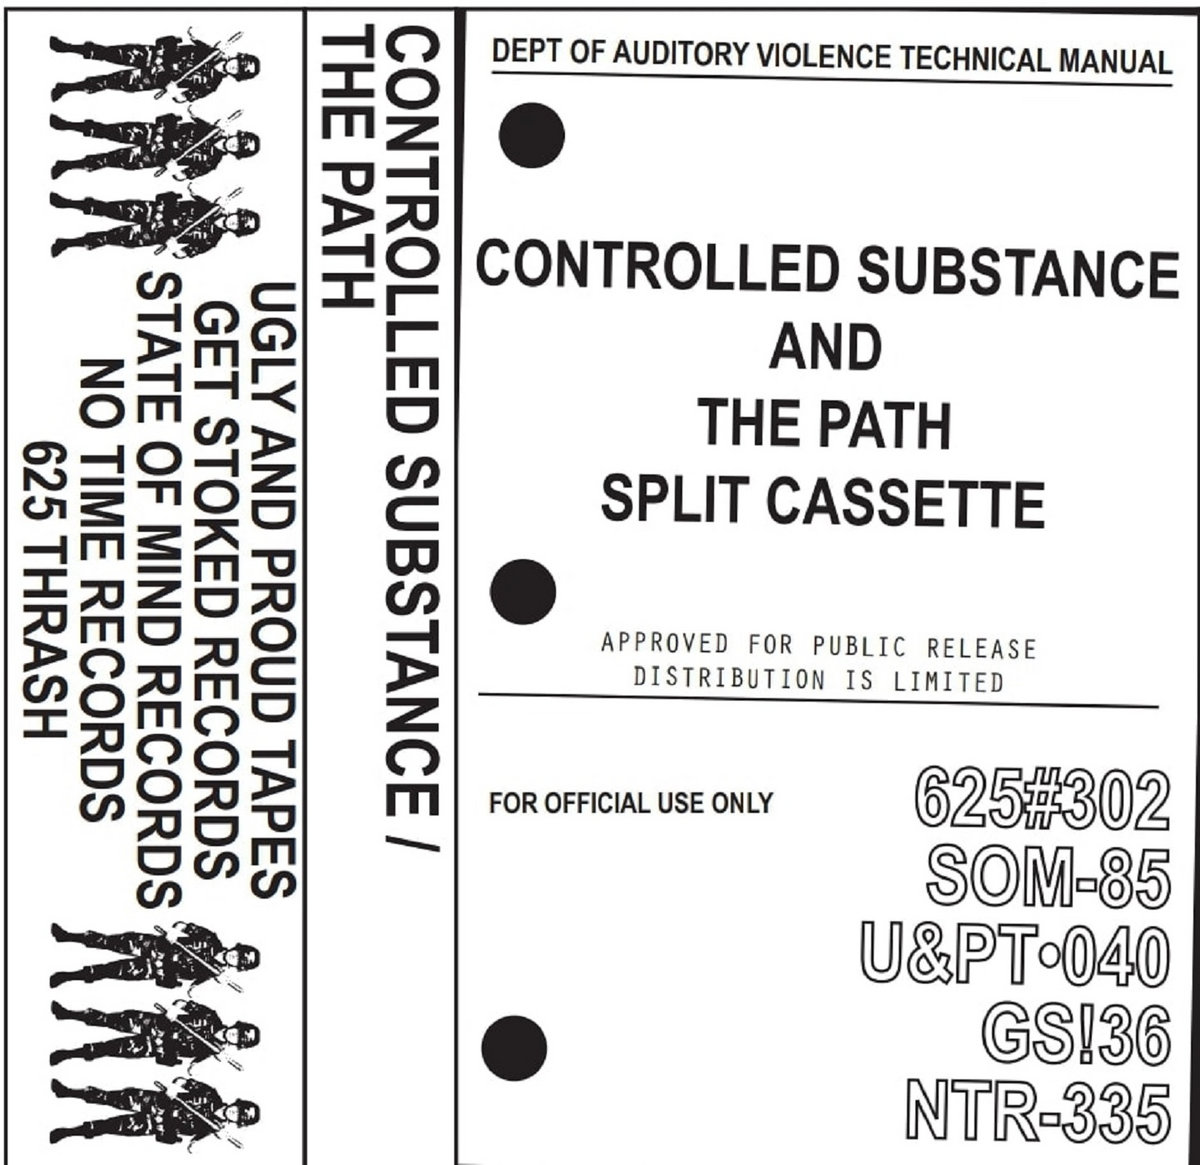 Controlled Substance / The Path - Split Cassette